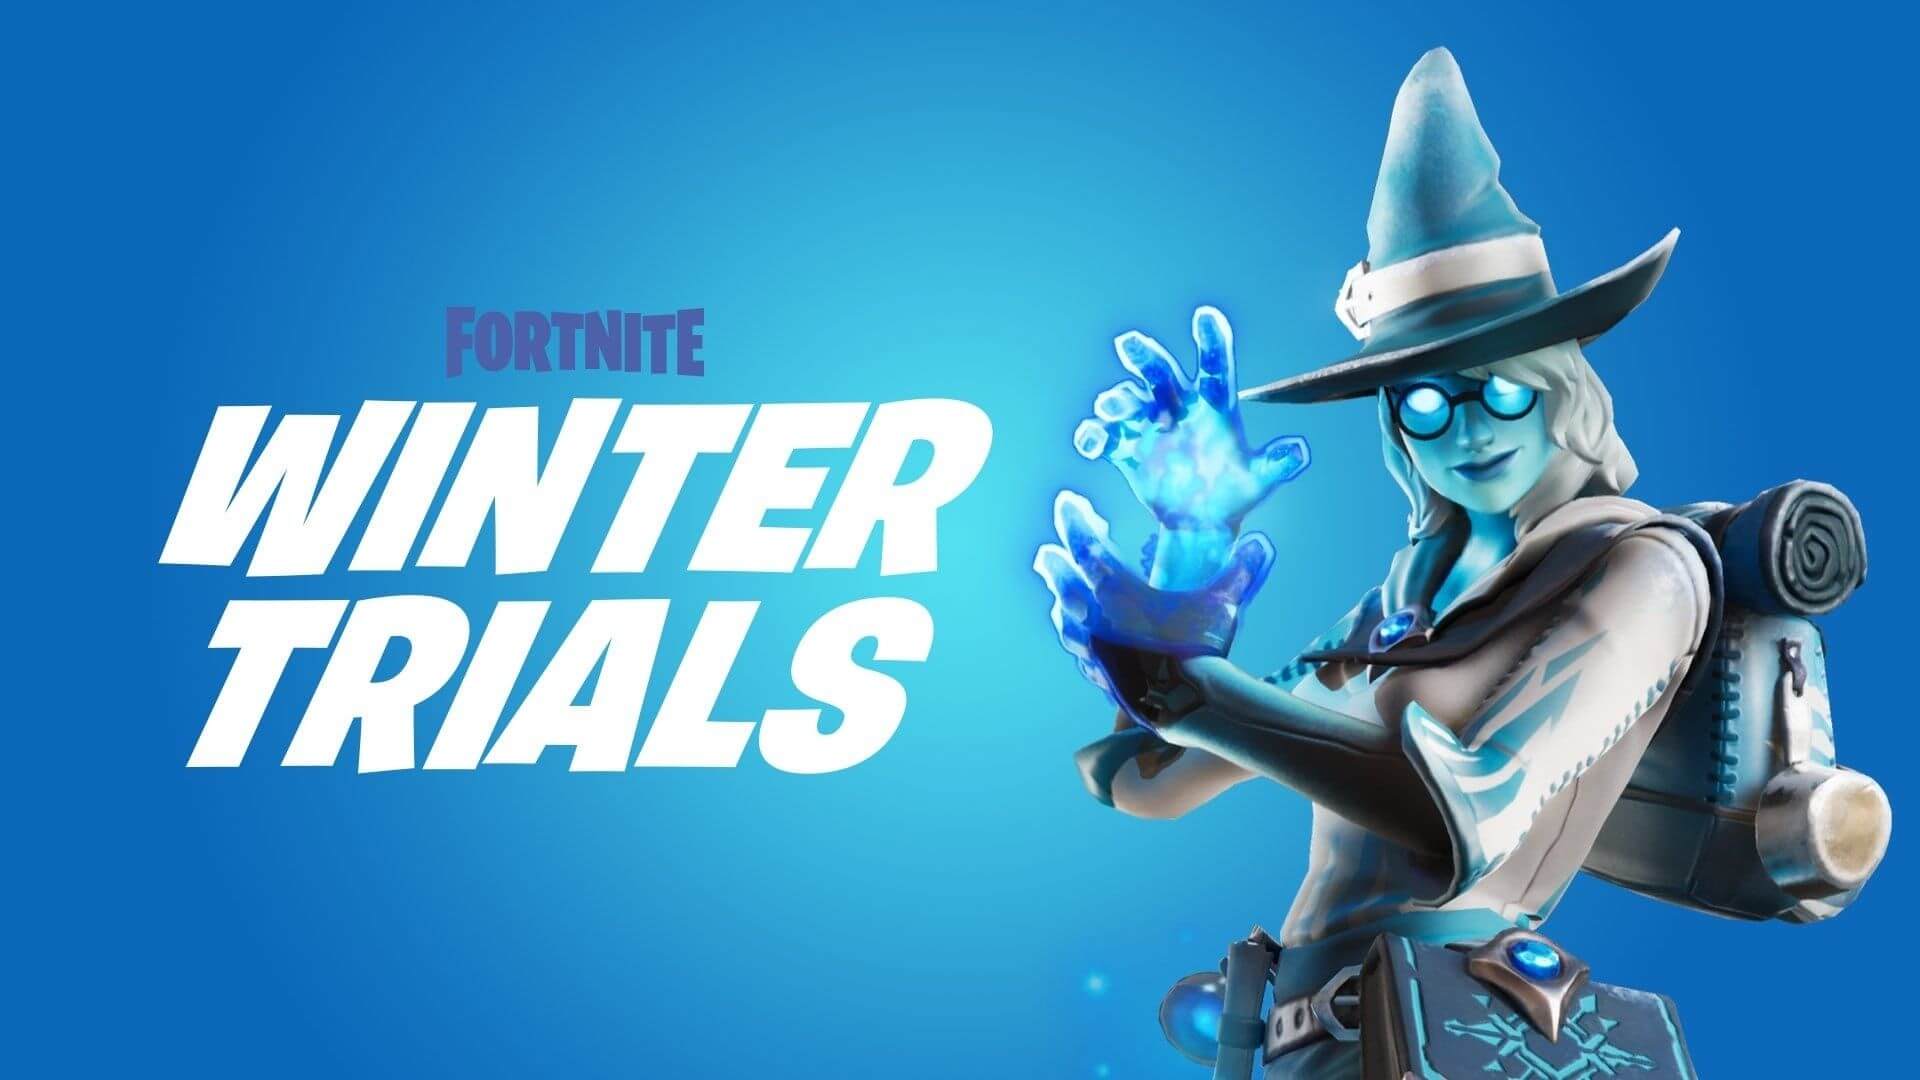 Winter Trials event in Fortnite